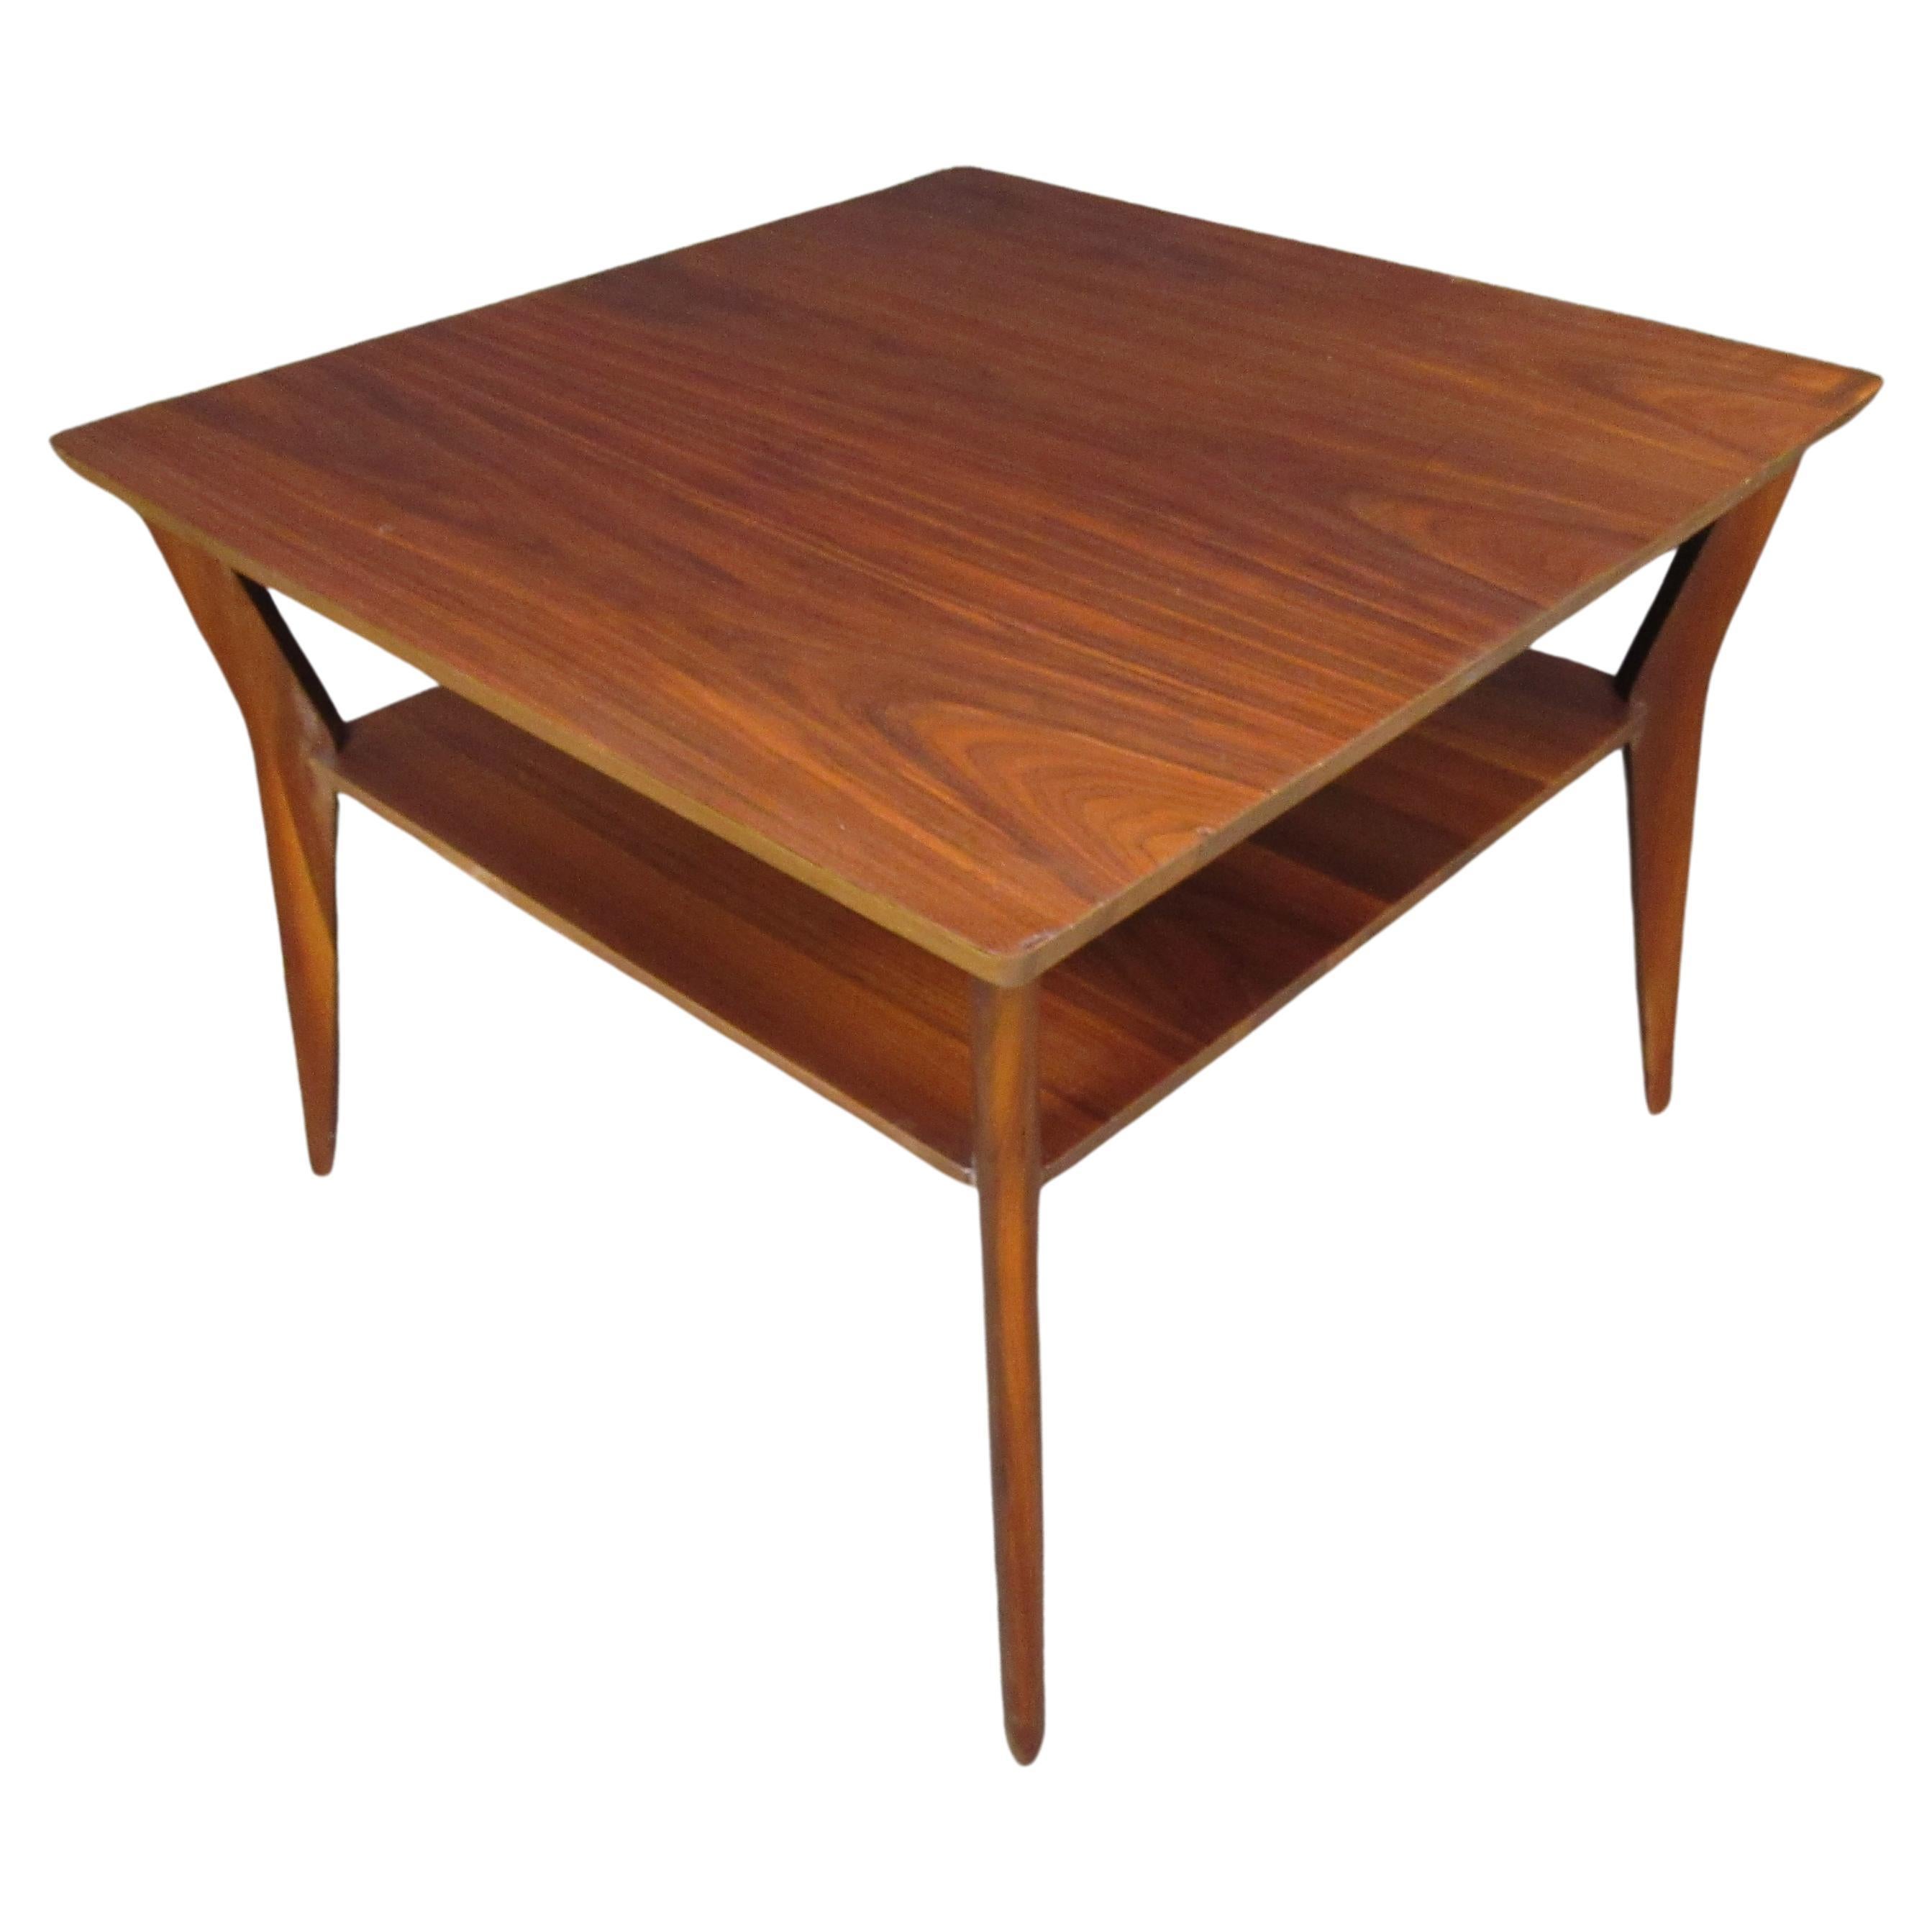 Boomerang Leg Coffee Table by Mersman Furniture